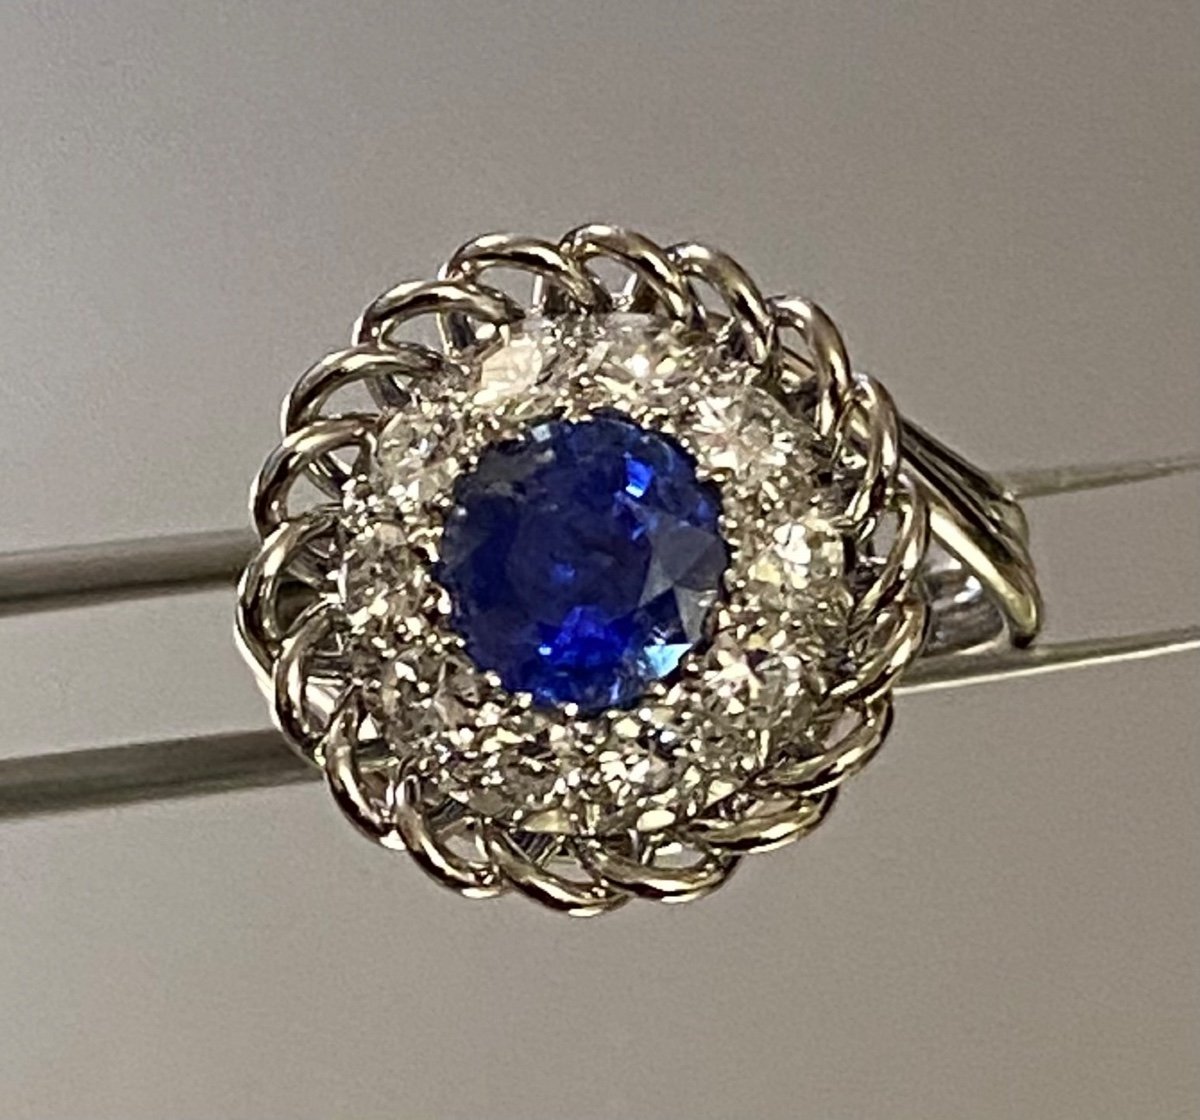 Antique Gold, Sapphire And Diamond Tourbillon Ring